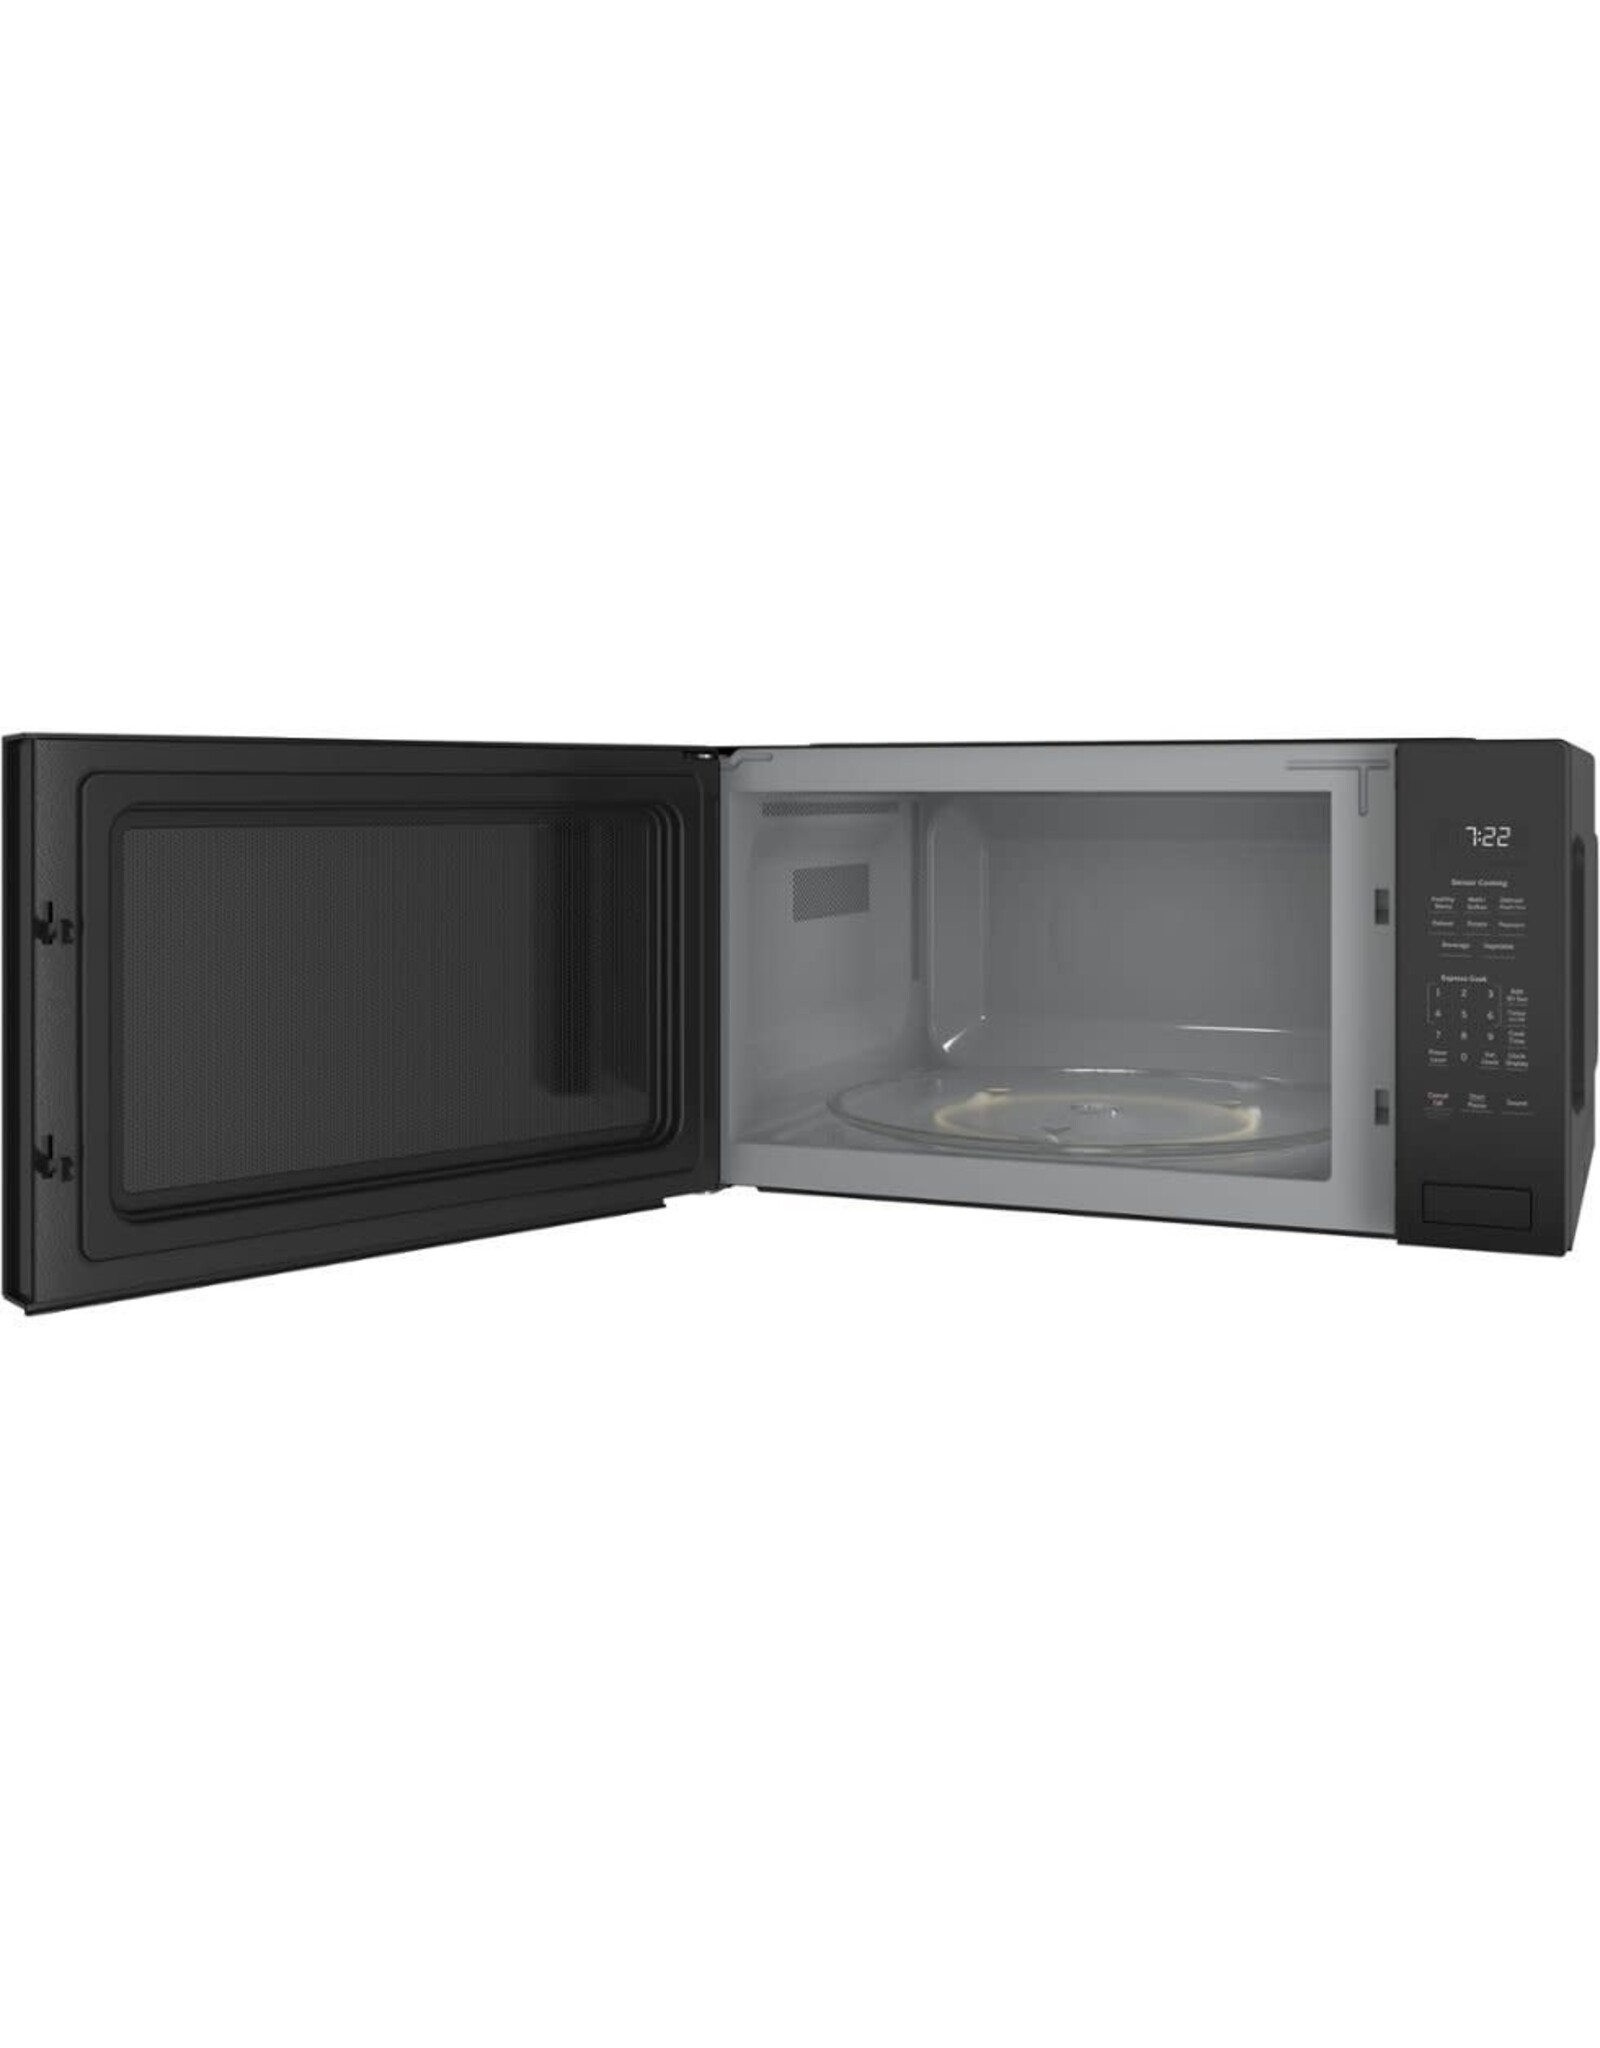 GE PROFILE PEB7227DLBB Profile 2.2 cu. ft. Countertop Microwave in Black with Sensor Cooking